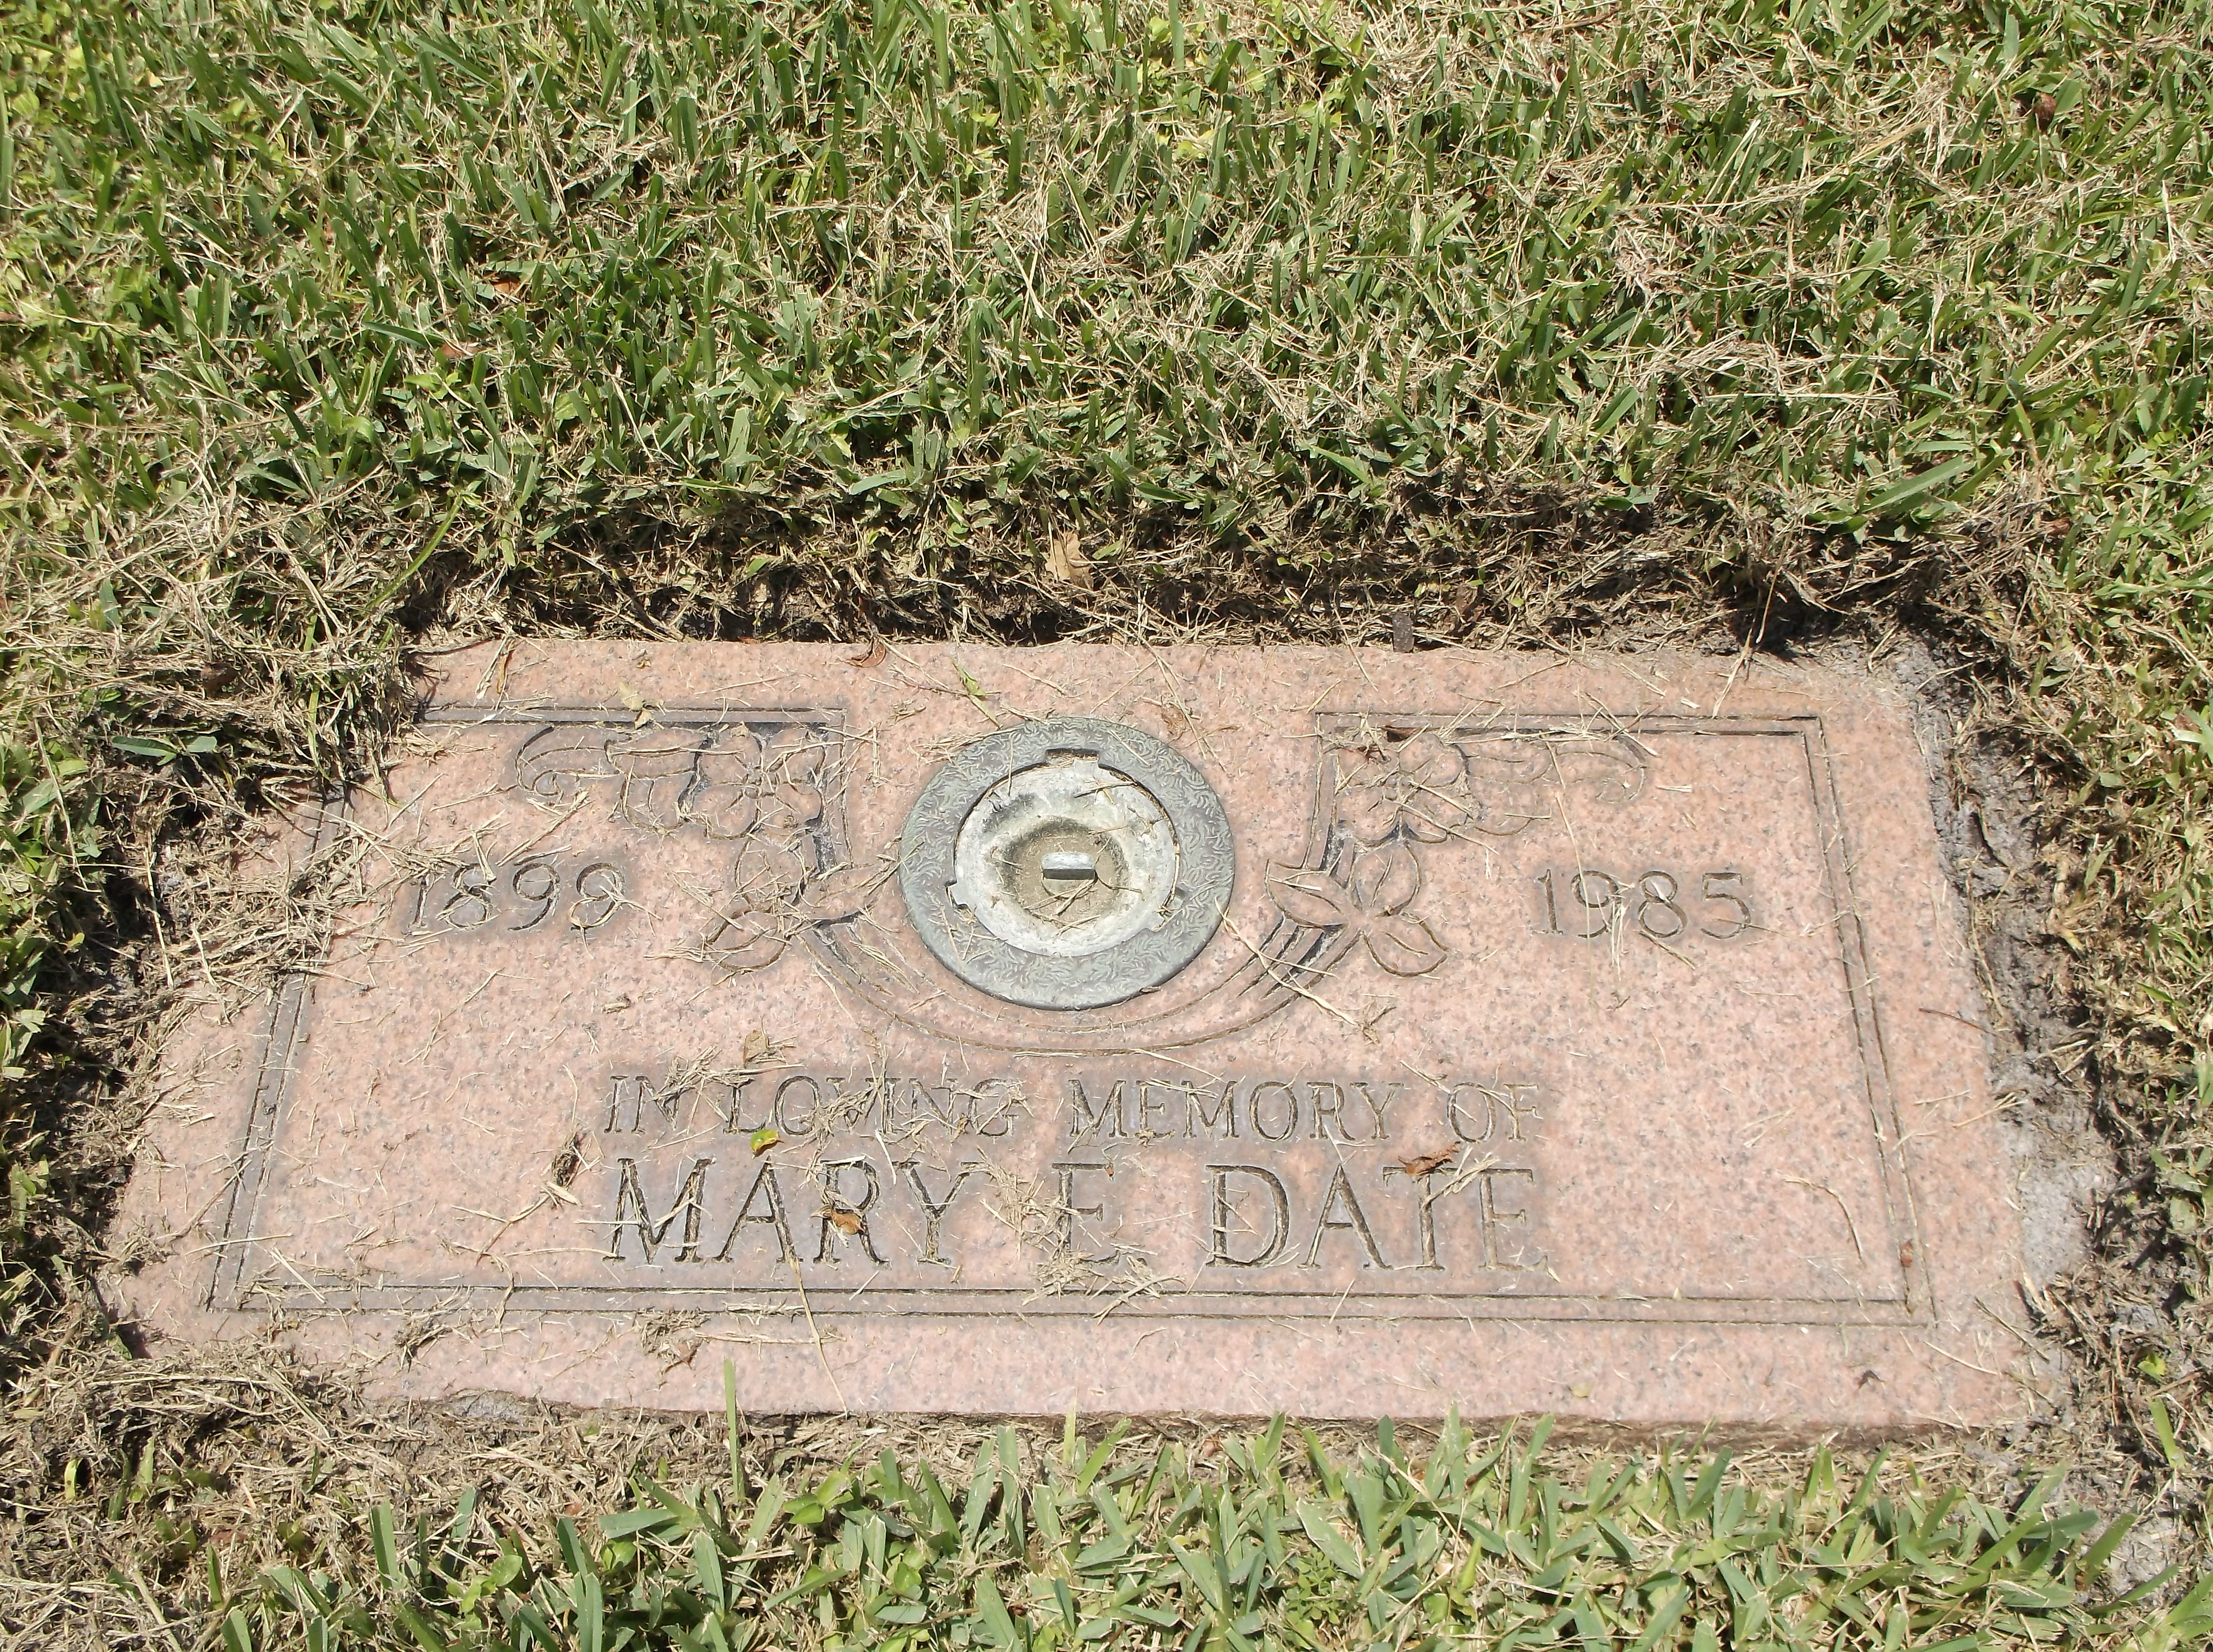 Mary E Date